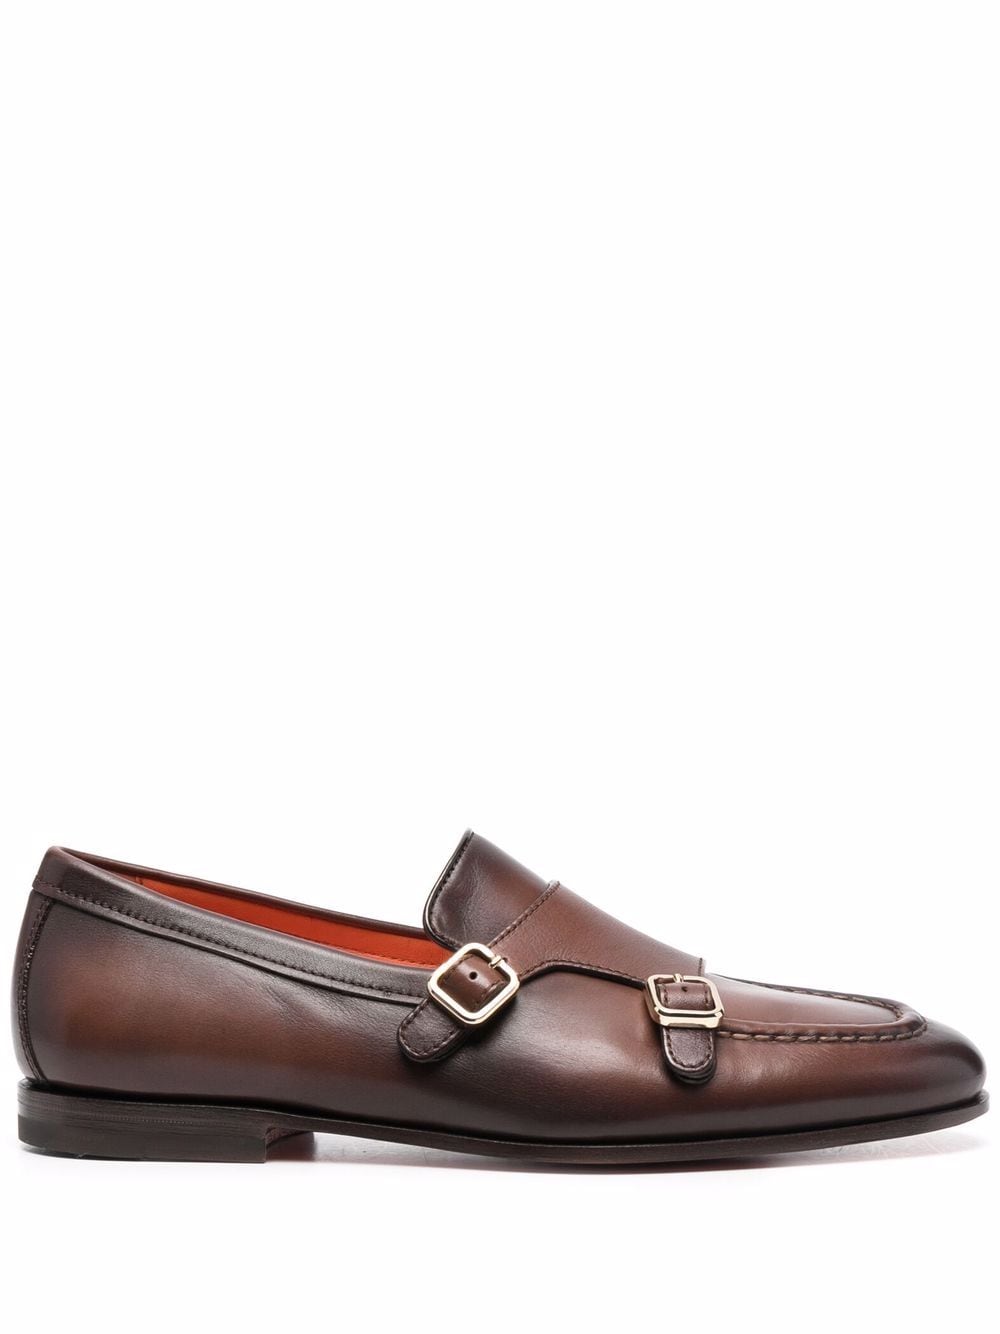 Santoni Carlos leather monk shoes - Brown von Santoni